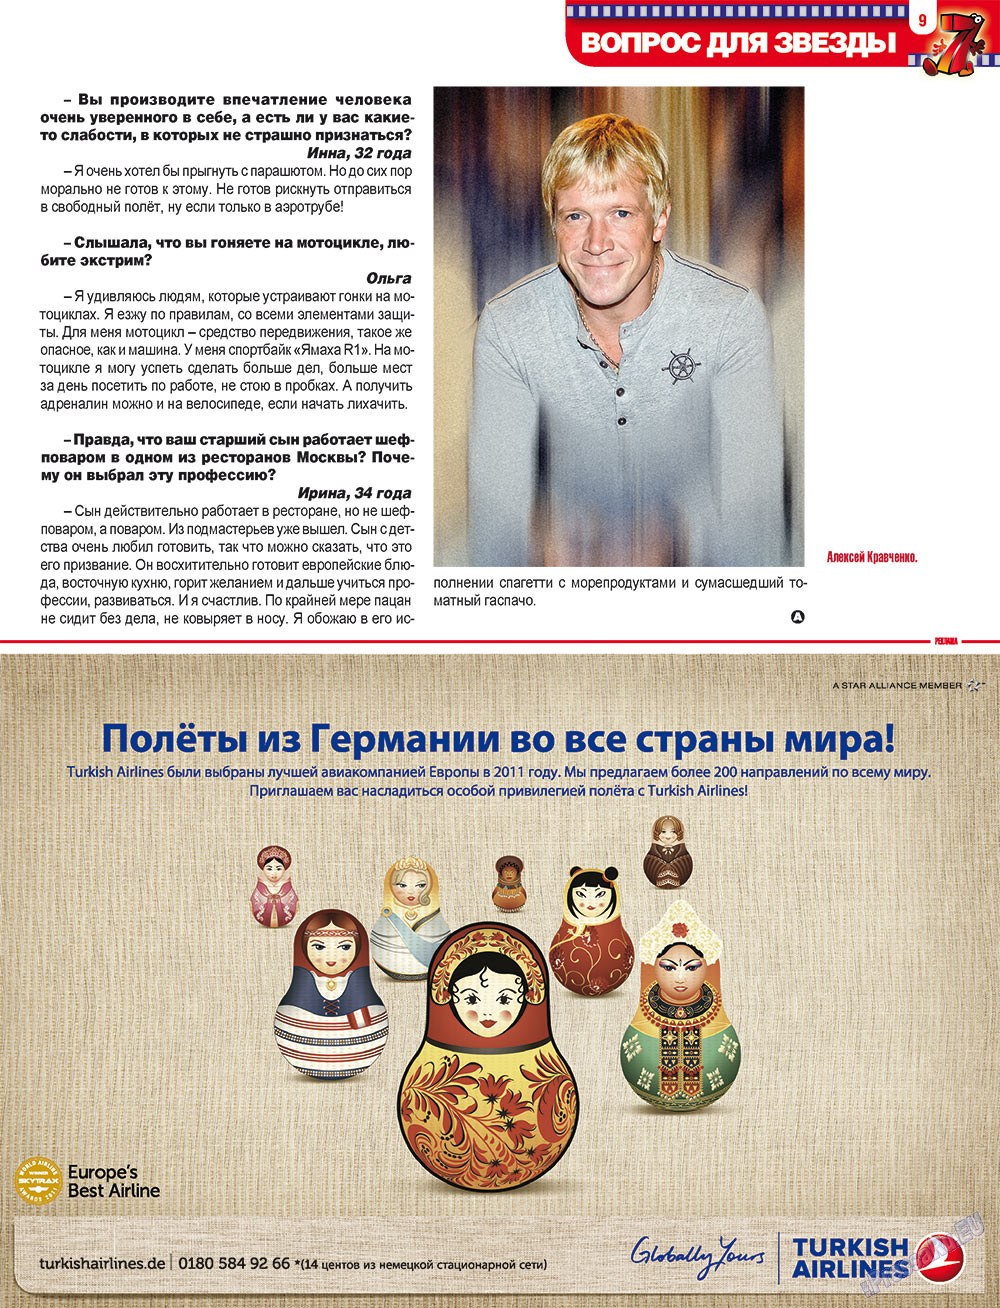 7плюс7я (журнал). 2012 год, номер 21, стр. 9